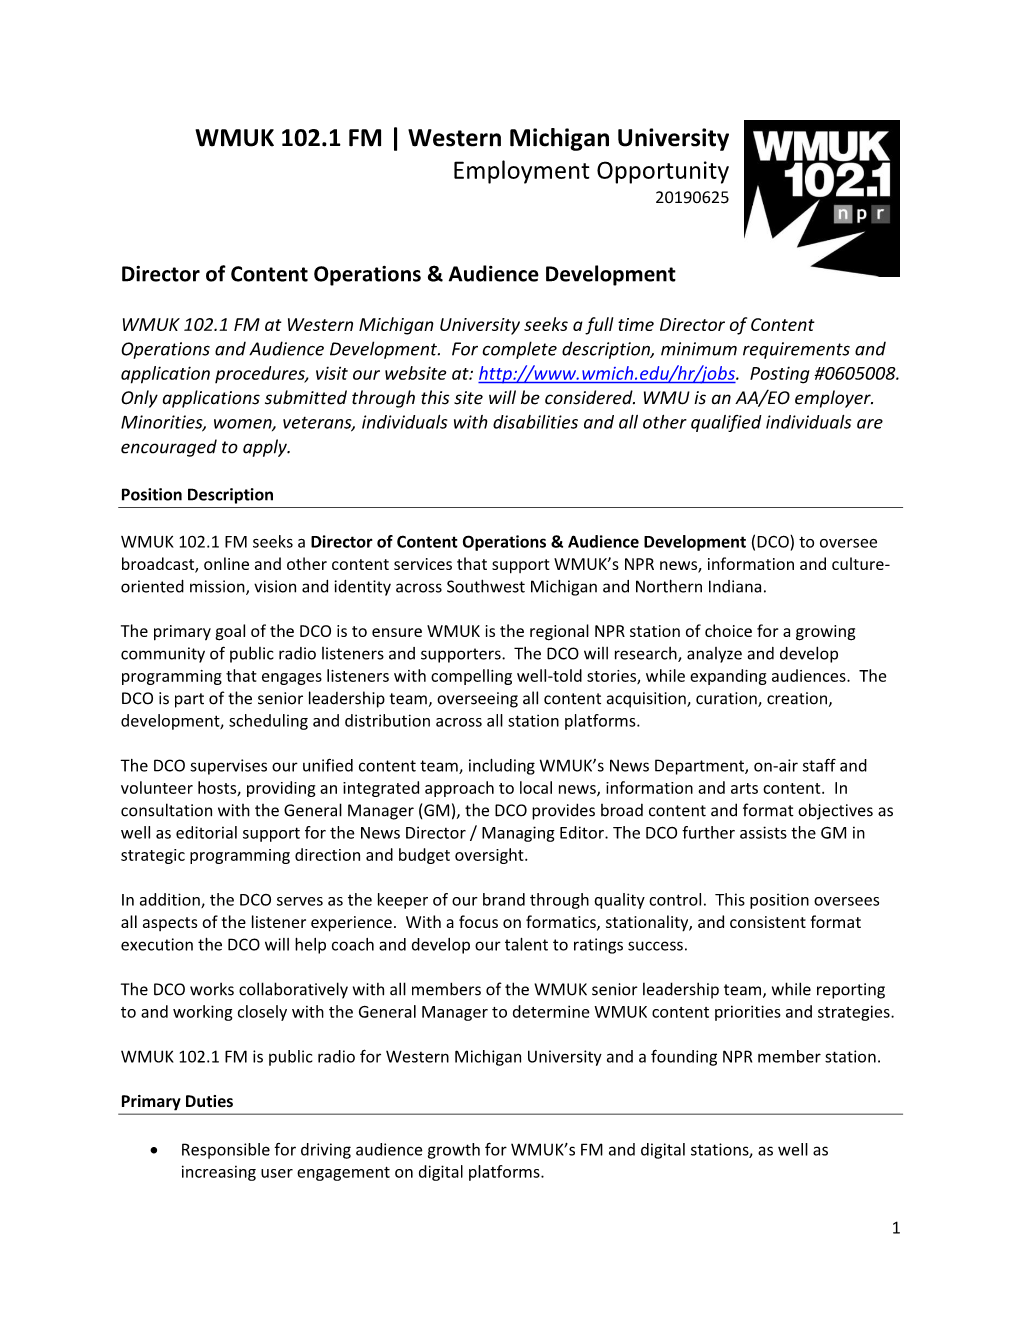 WMUK 102.1 FM | Western Michigan University Employment Opportunity 20190625